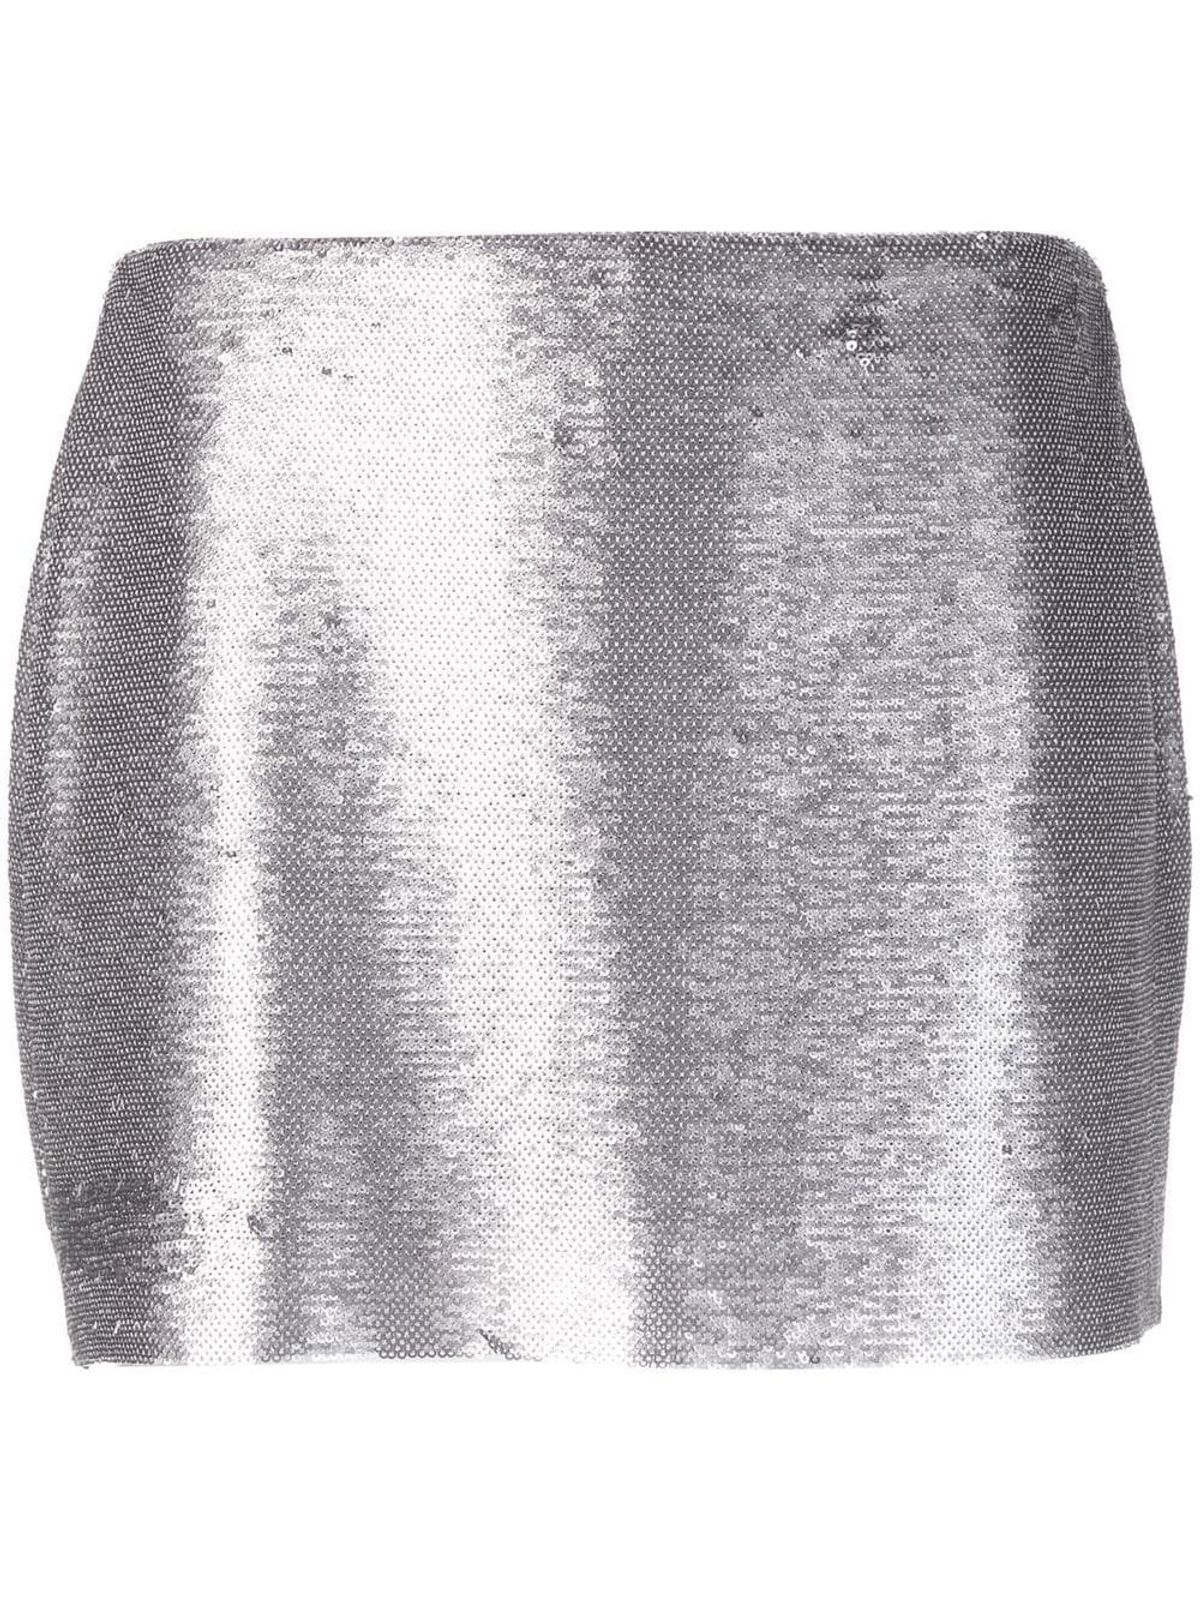 Sequin-Embellished Mini Skirt